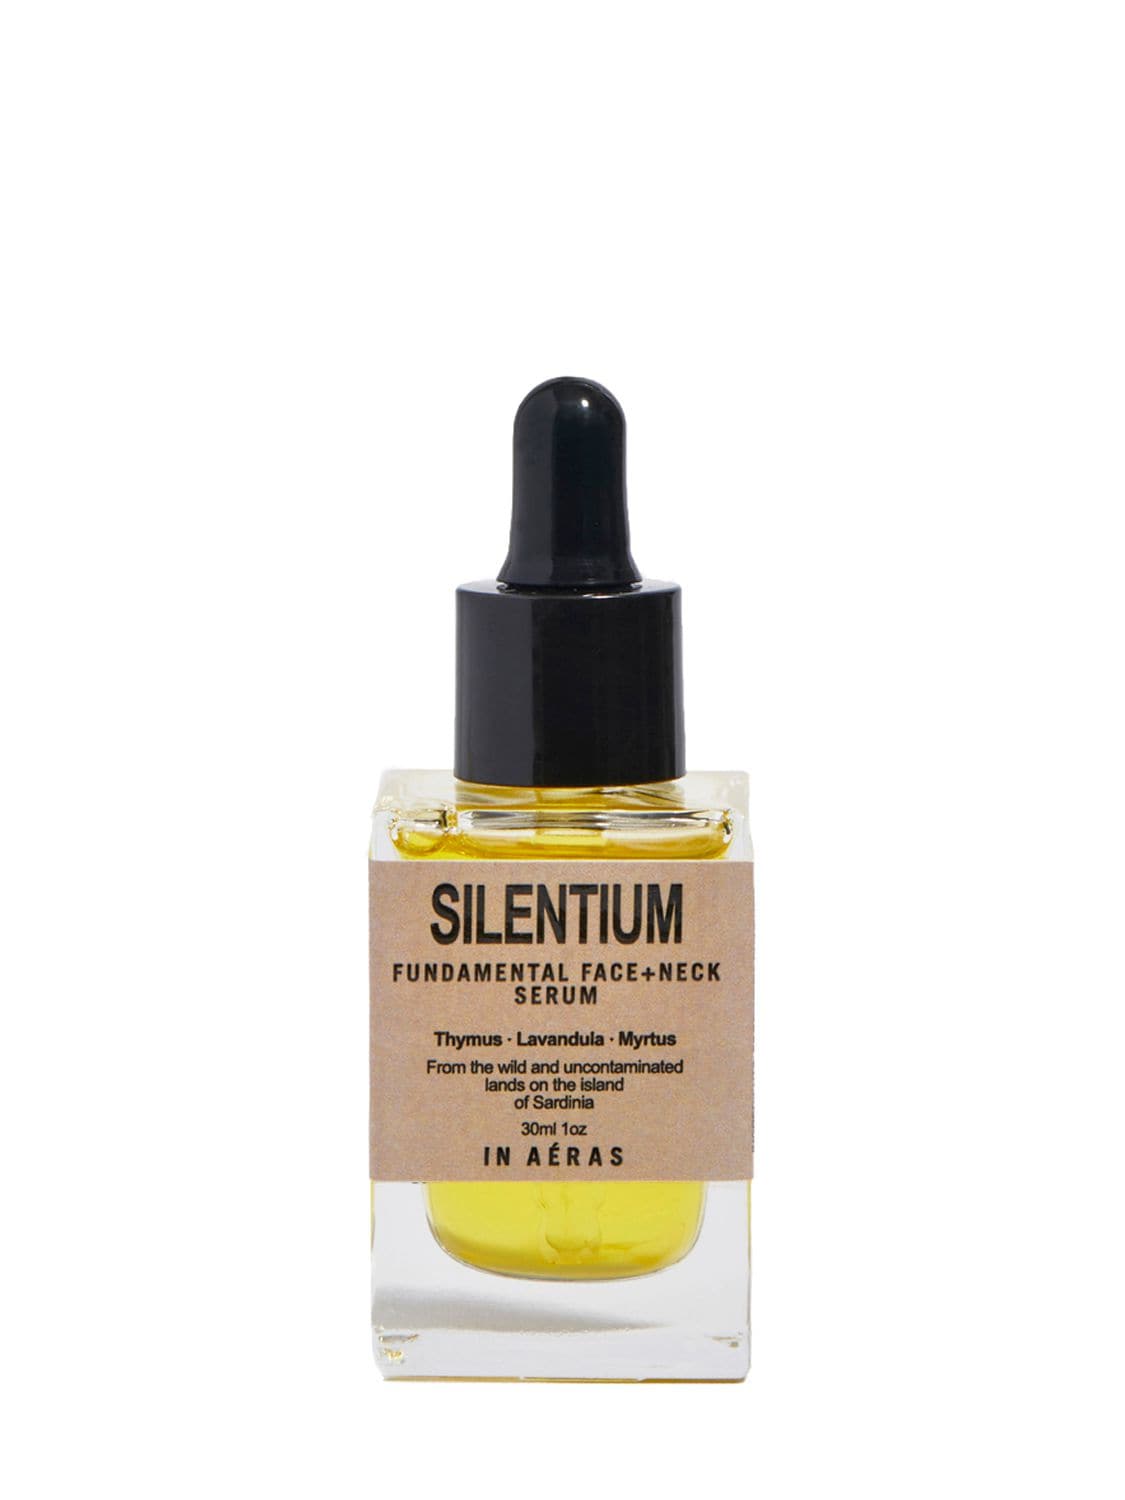 Silentium Fundamental Face+neck Serum – BEAUTY – WOMEN > FACE CARE > MOISTURIZER